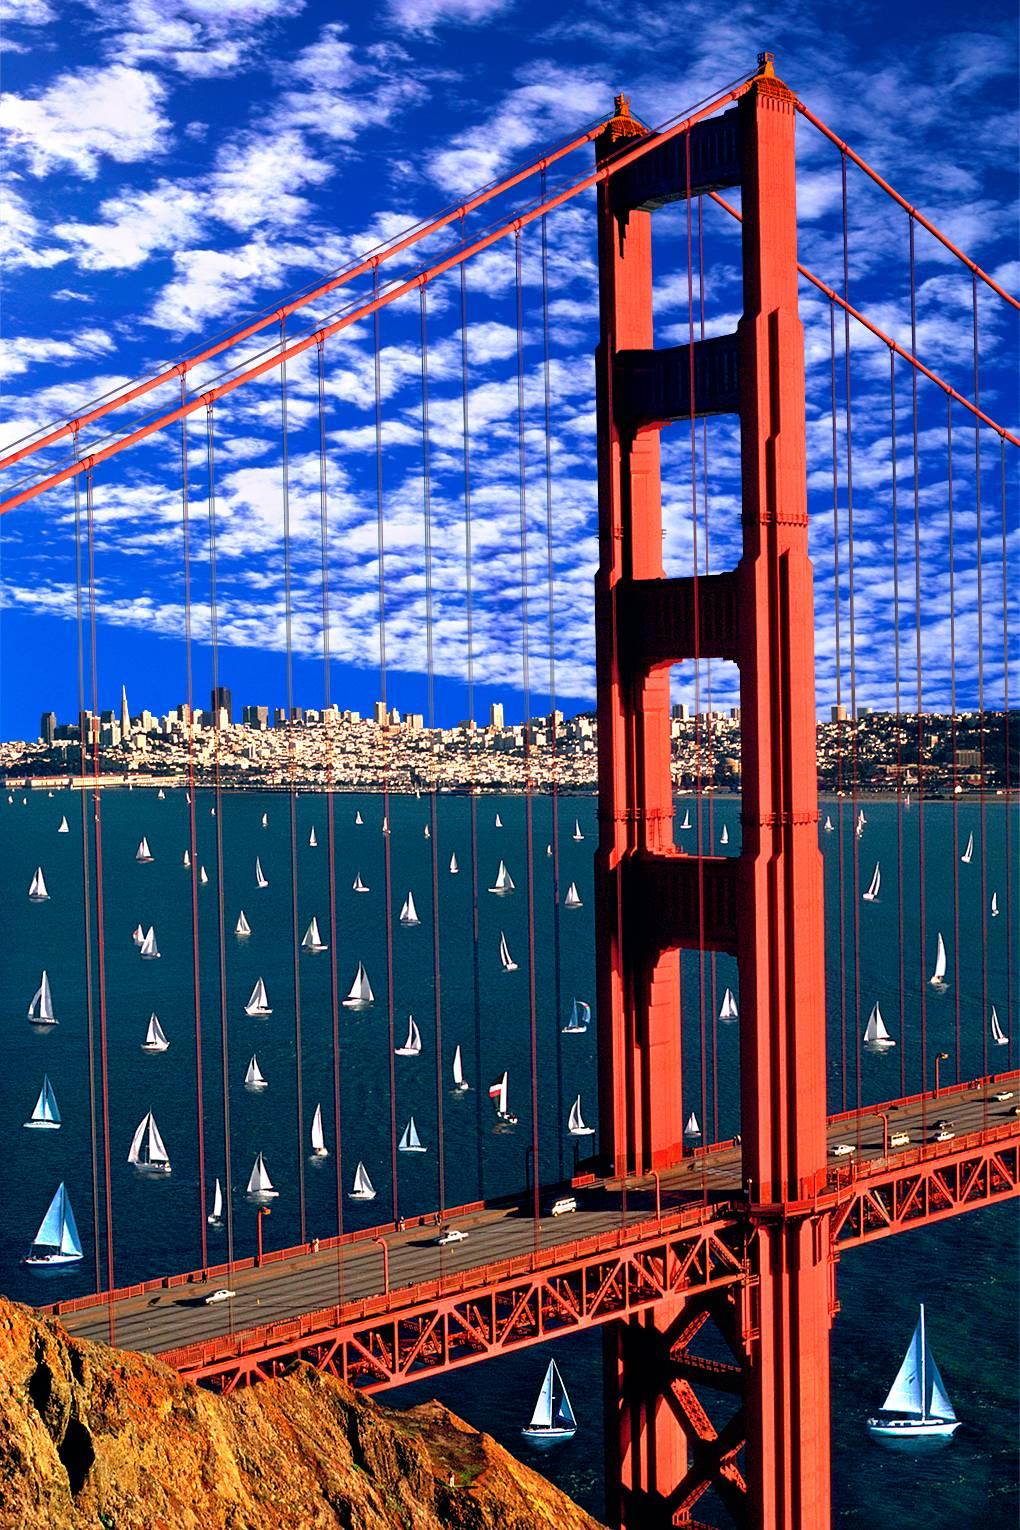 Mitchell Funk Landscape Photograph - Golden Gate Bride with Sailboats